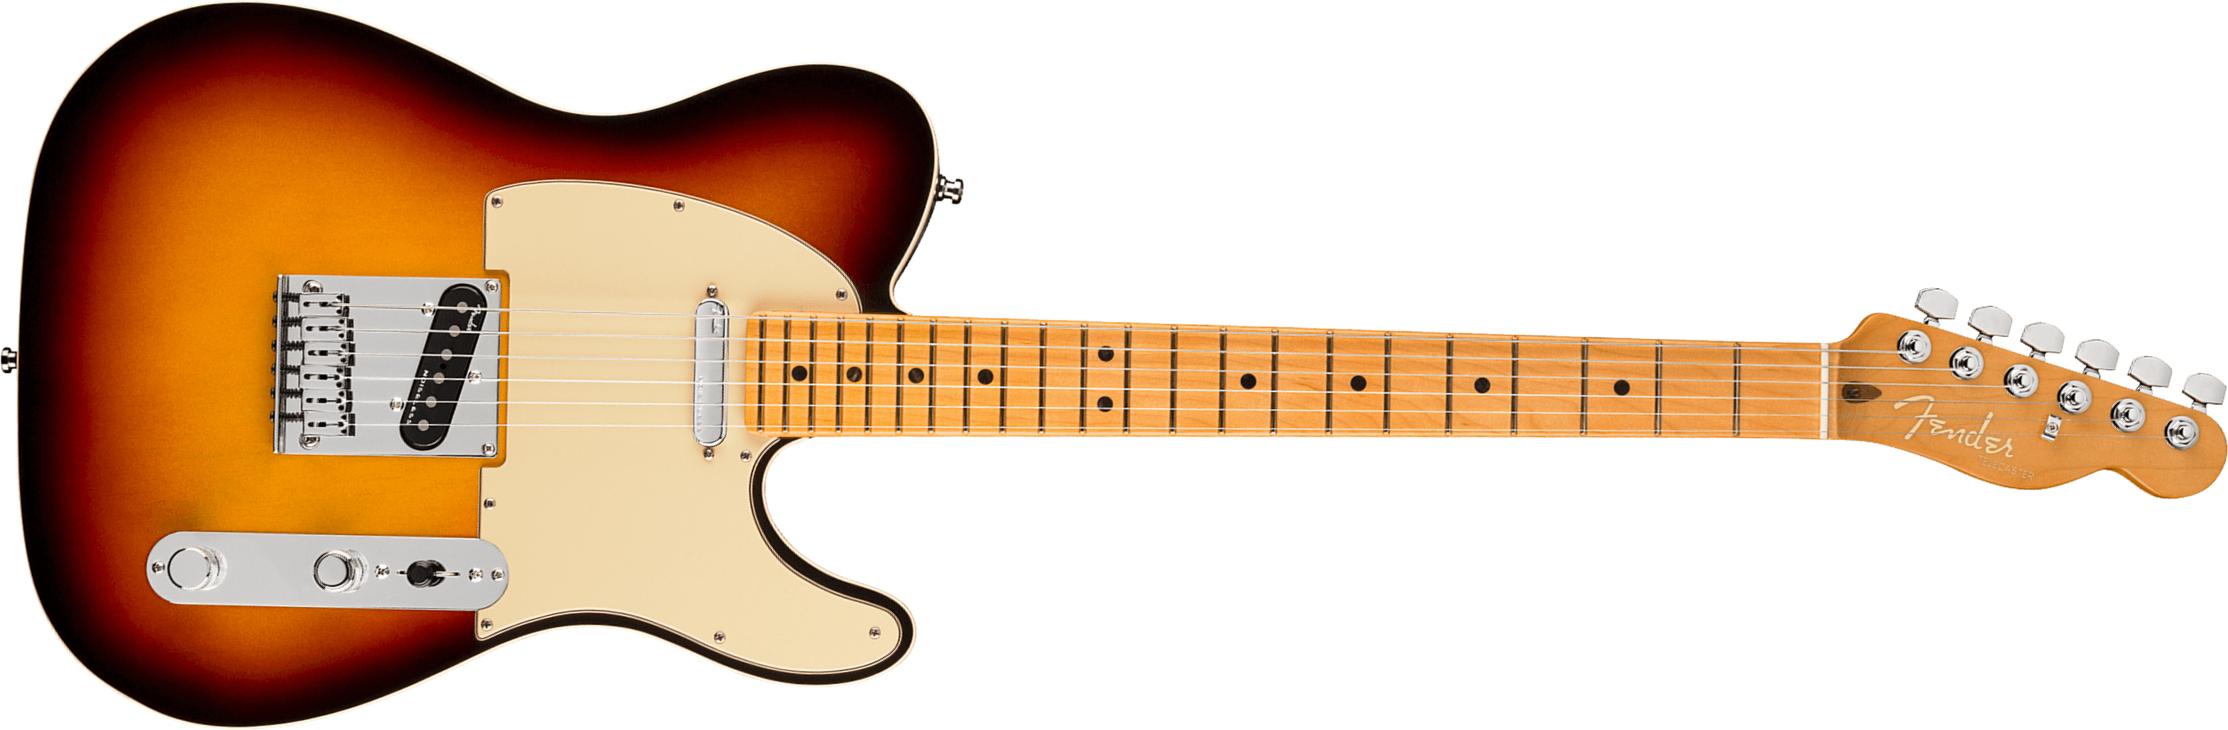 Fender Tele American Ultra 2019 Usa Mn - Ultraburst - Televorm elektrische gitaar - Main picture